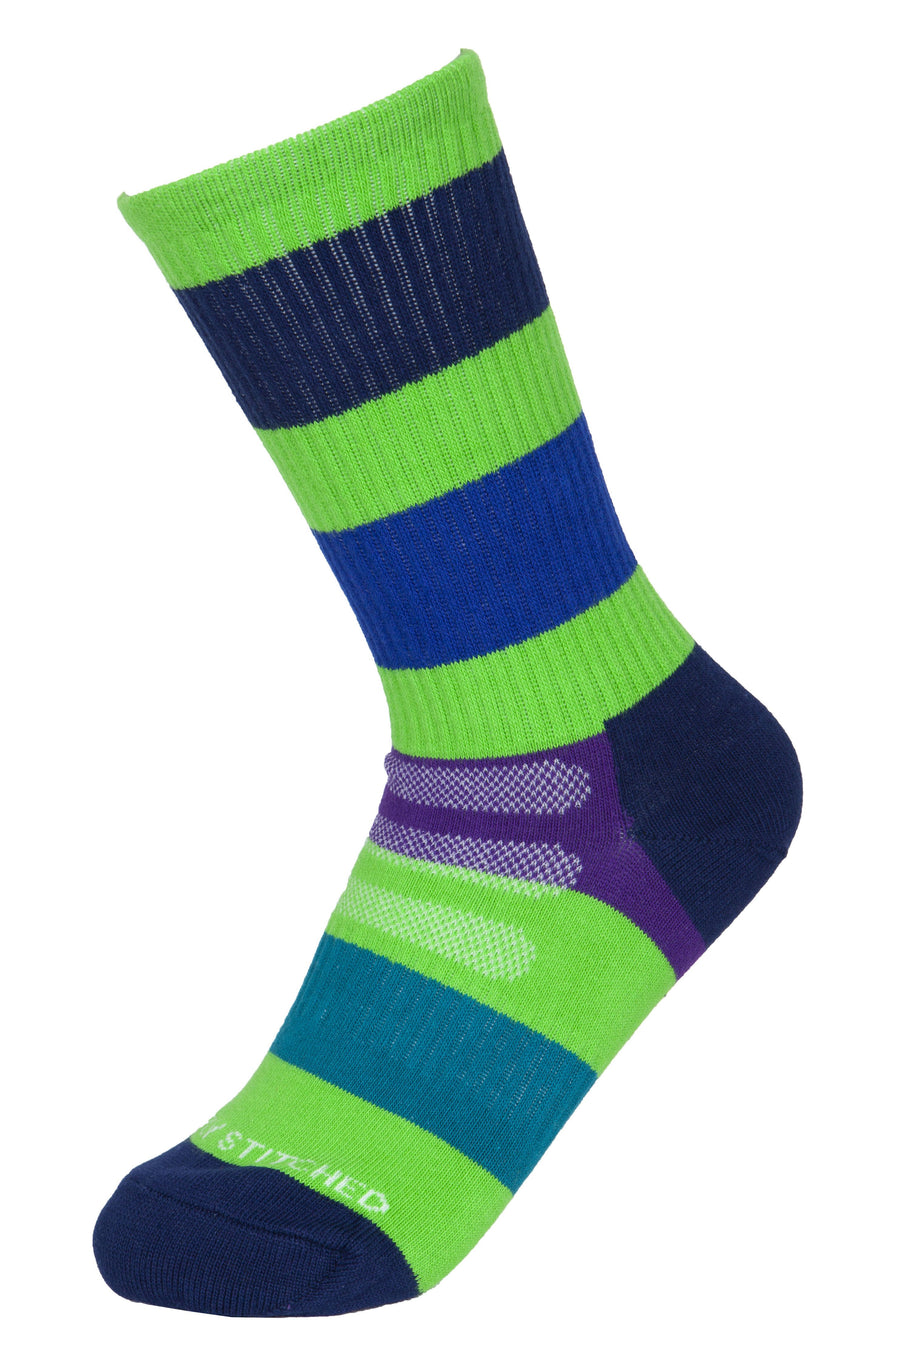 kd purple socks